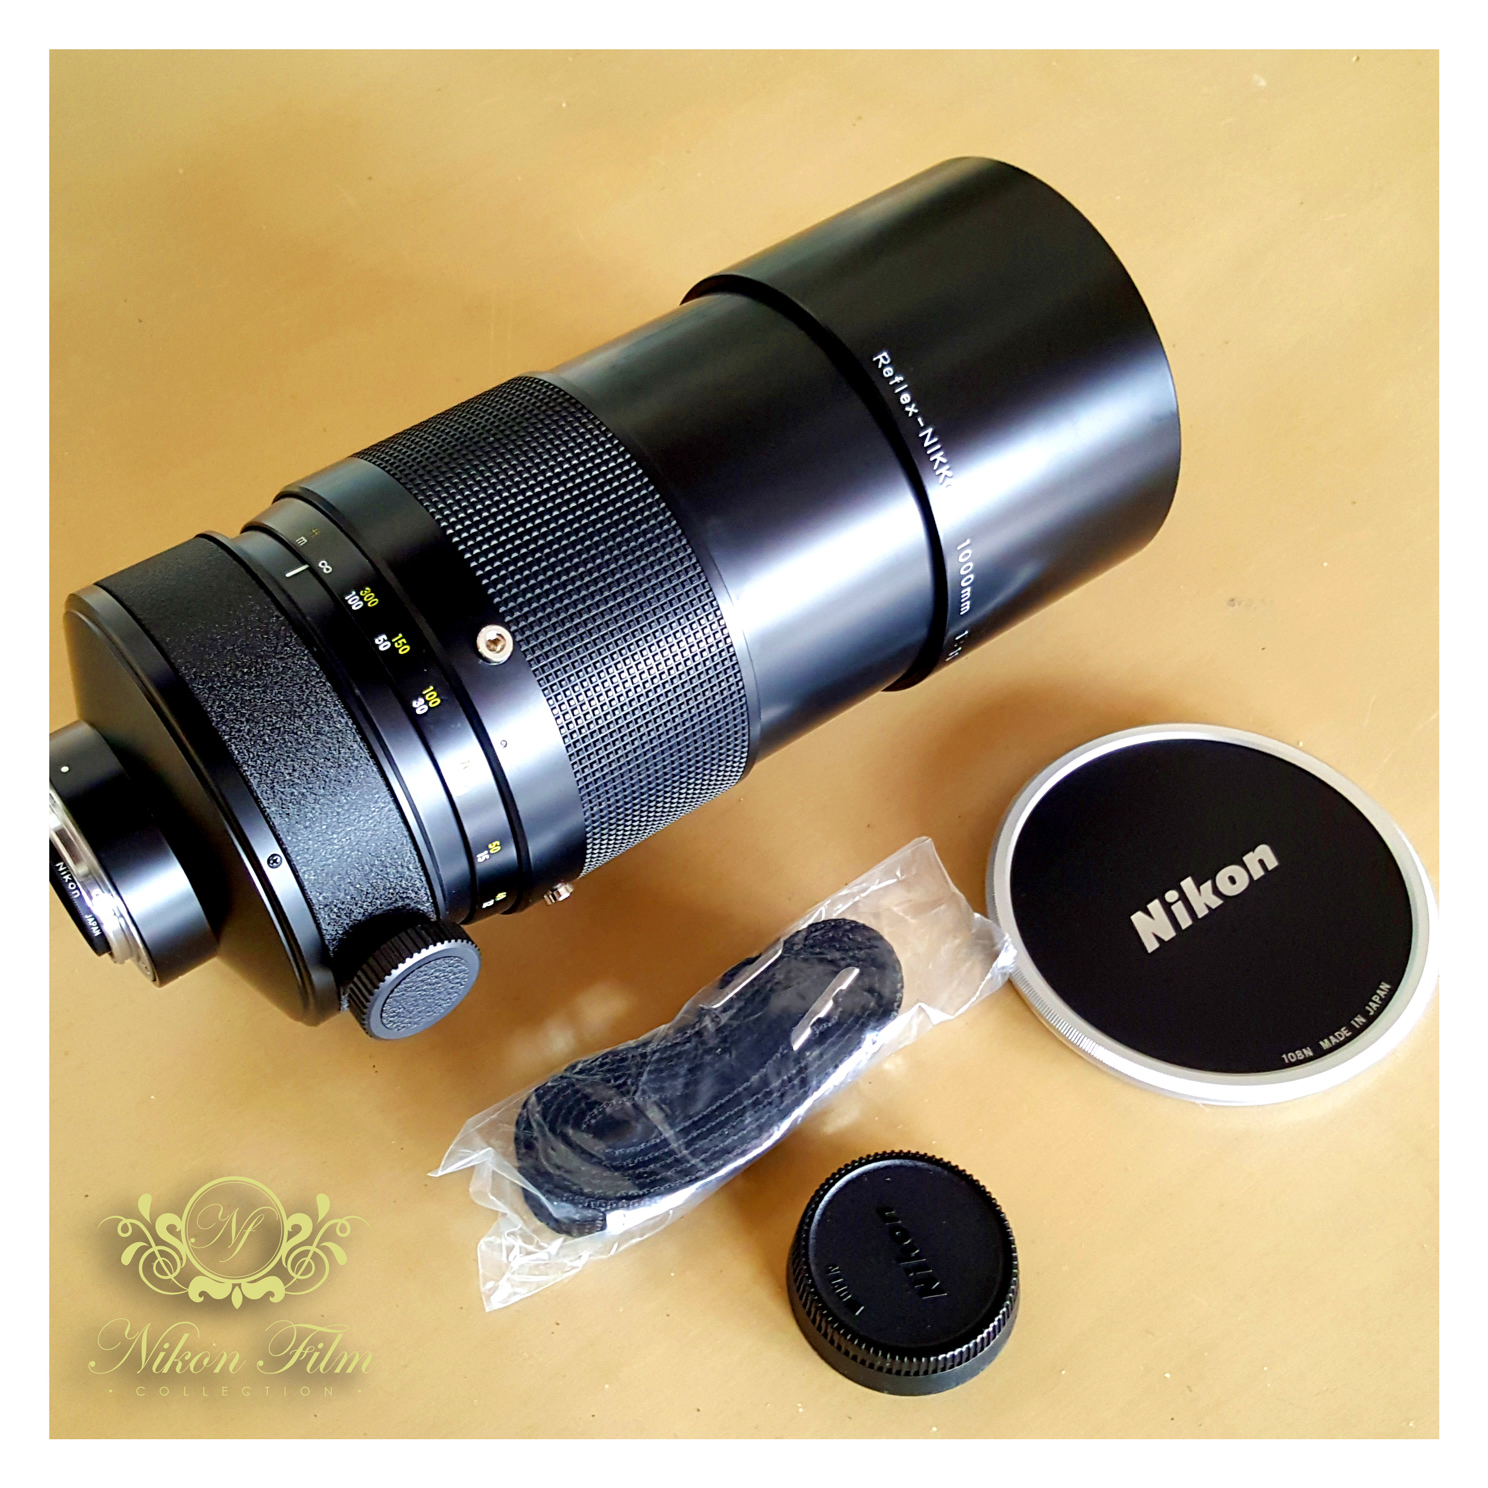 Nikon Reflex-Nikkor 1000mm F/11 Ai - Boxed